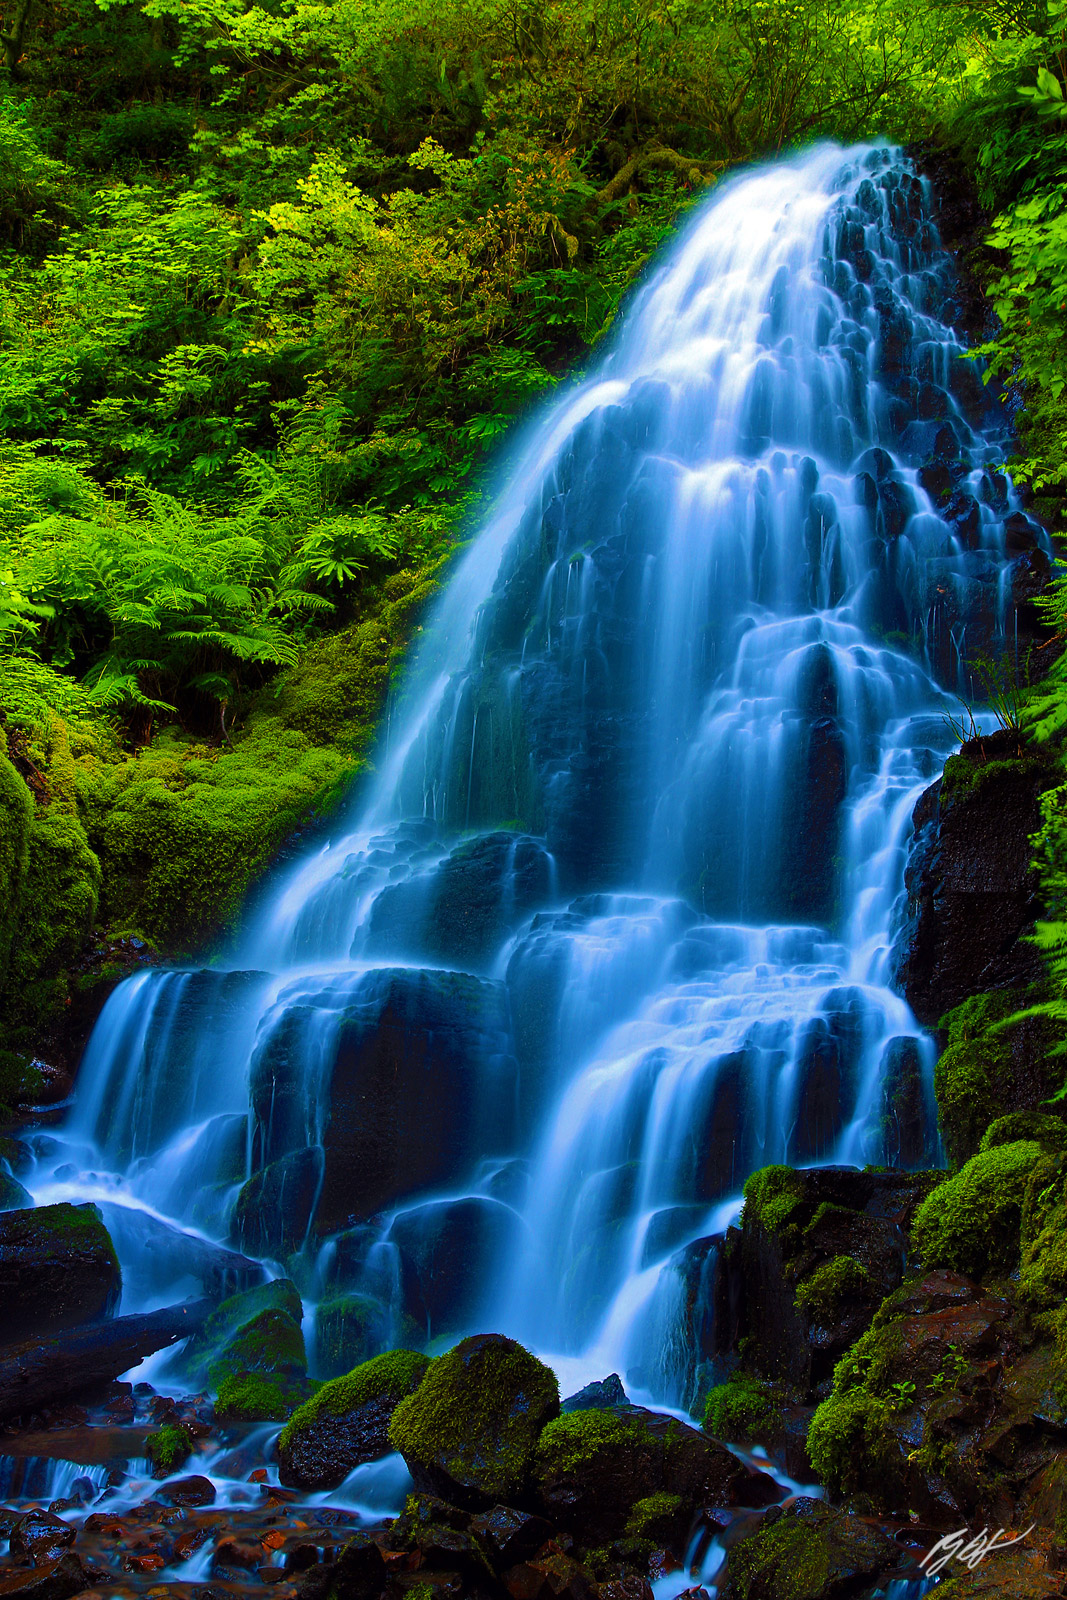 Fairy Falls in the Columbia River Gorge in Oregon